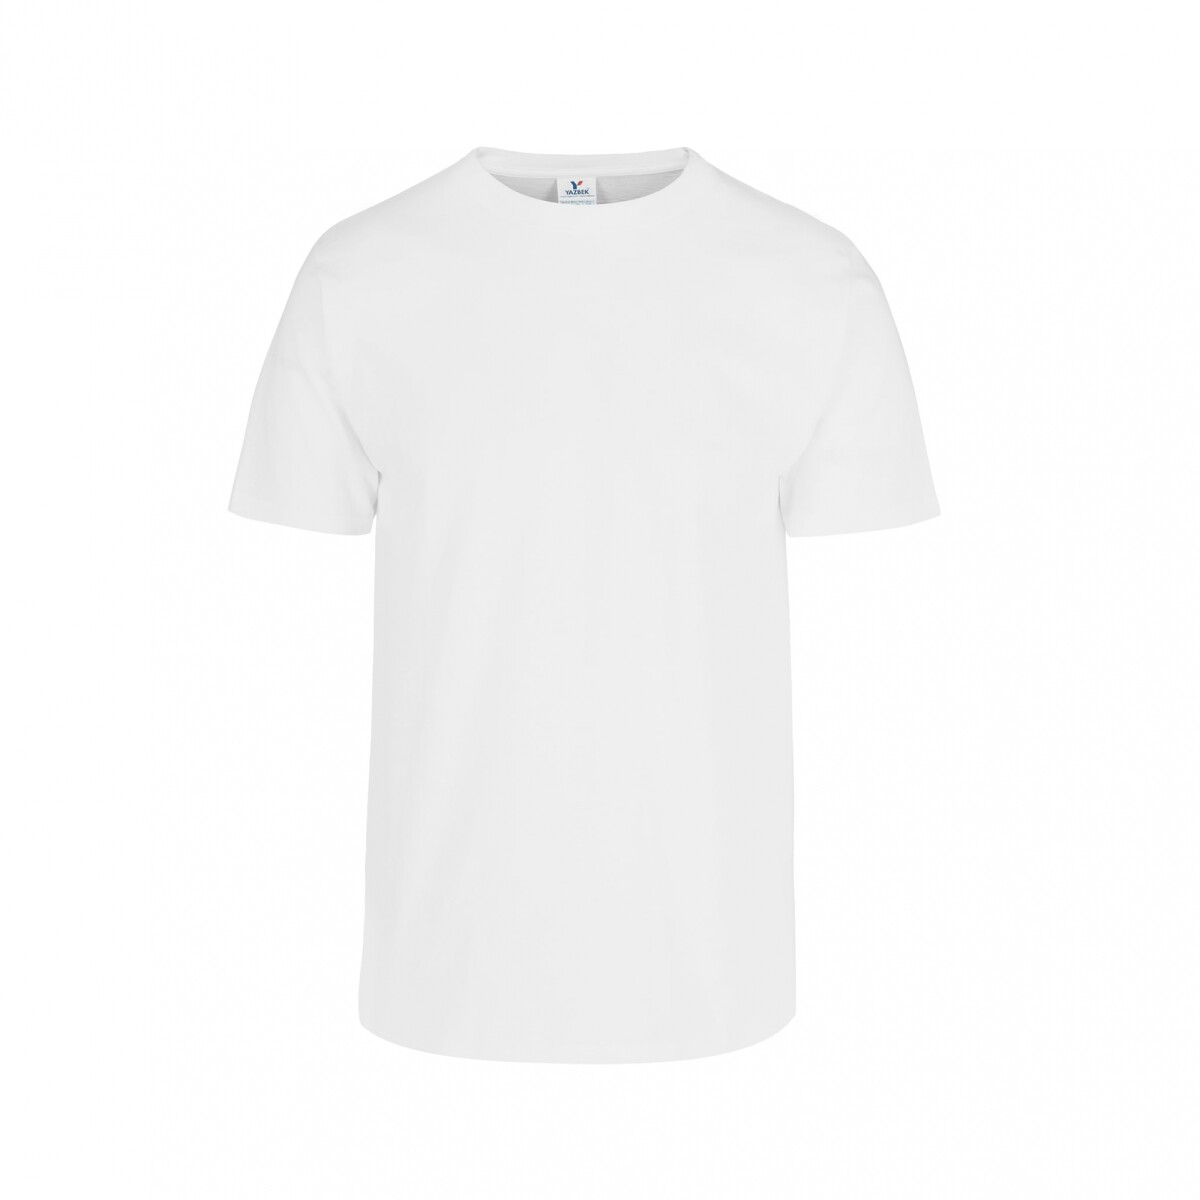 Camiseta a la base peso completo - Blanco 